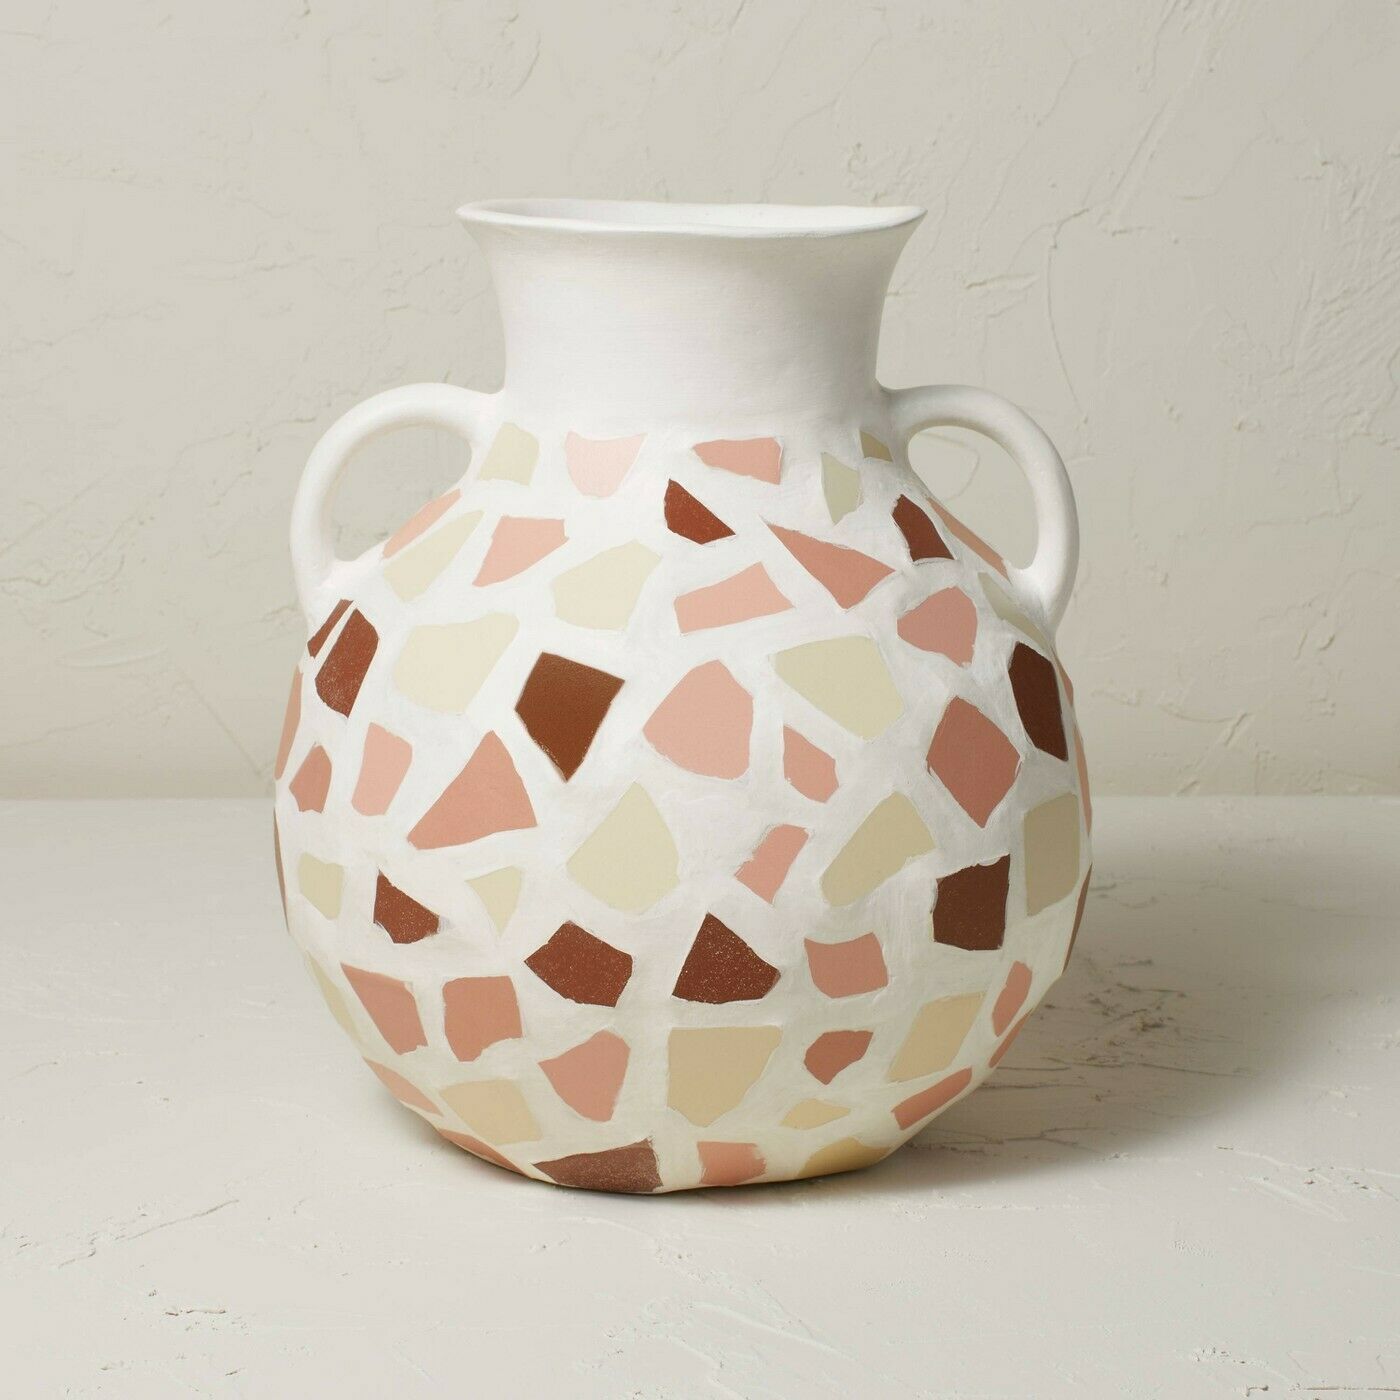 12.5" x 11.5" Round Mosaic Vase with Handles White/Brown